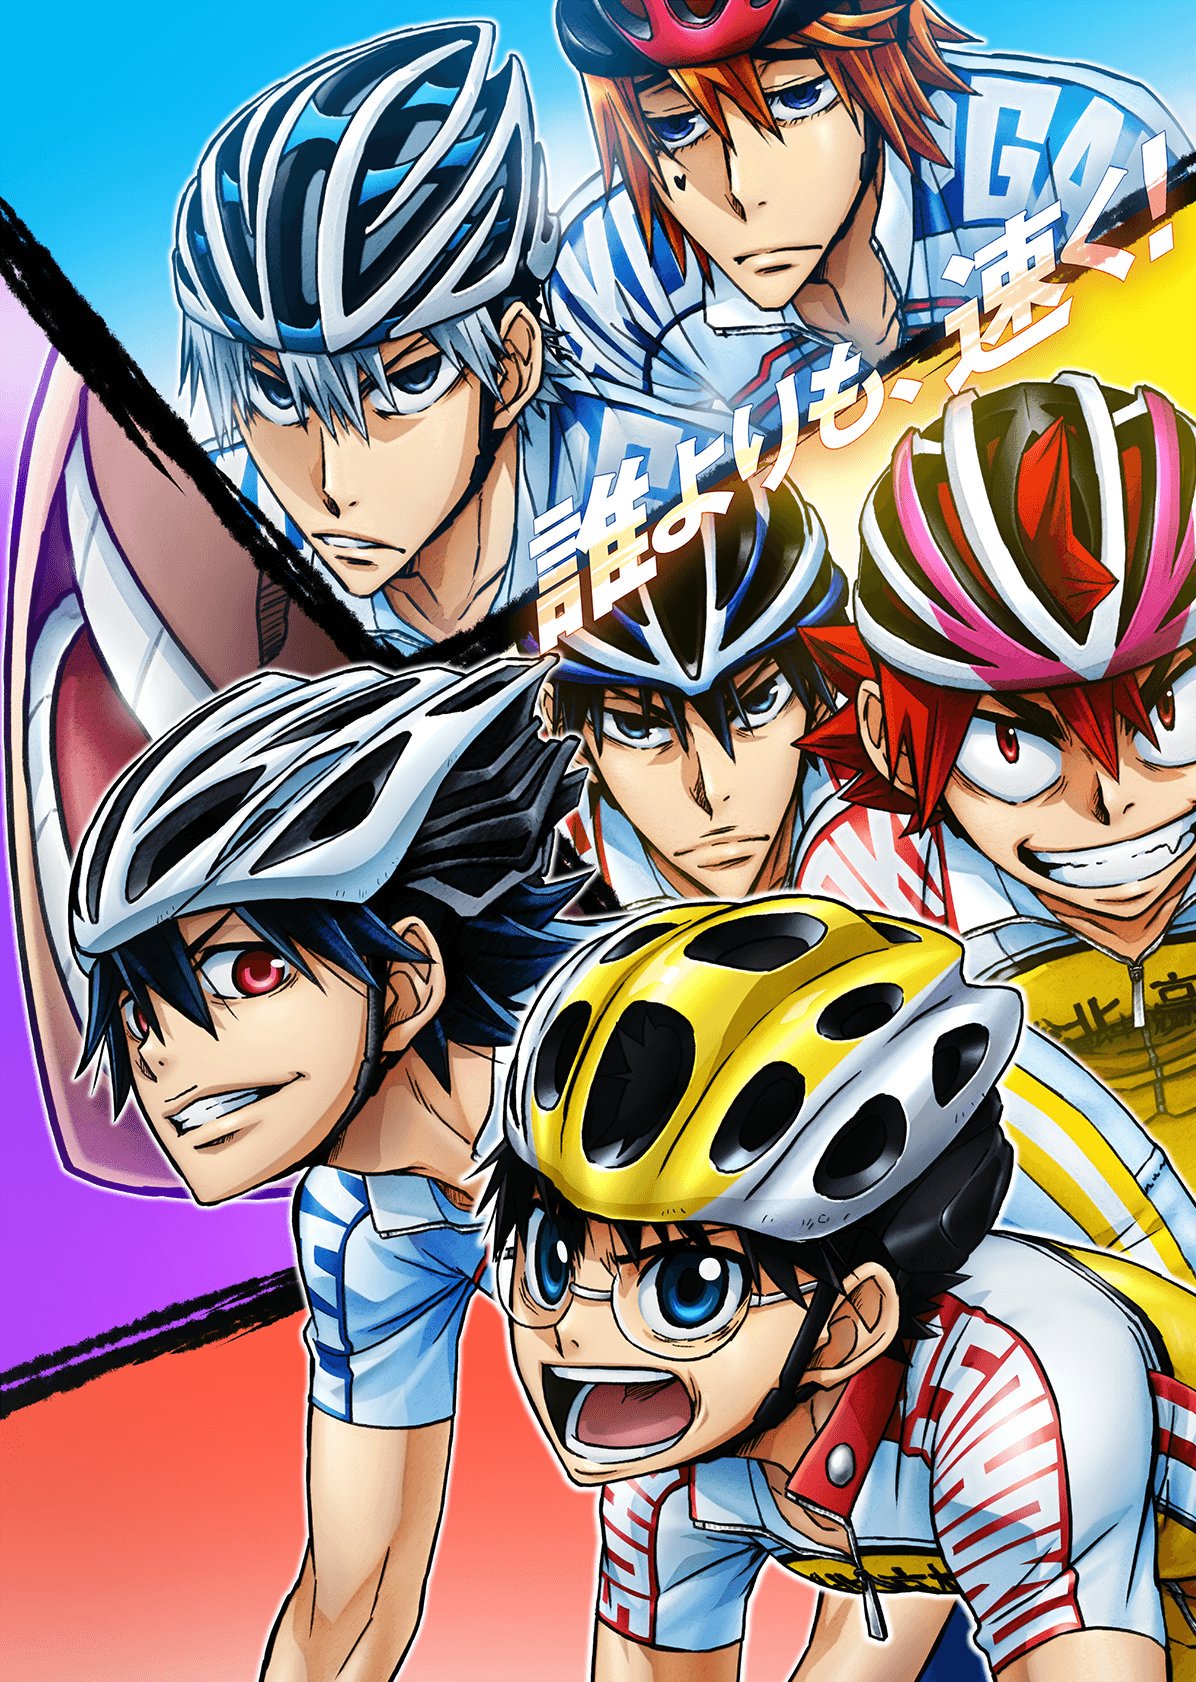 Yowamushi Pedal Glory Line الحلقة 22 مترجمة الموسم الرابع اون لاين Shahiid Anime